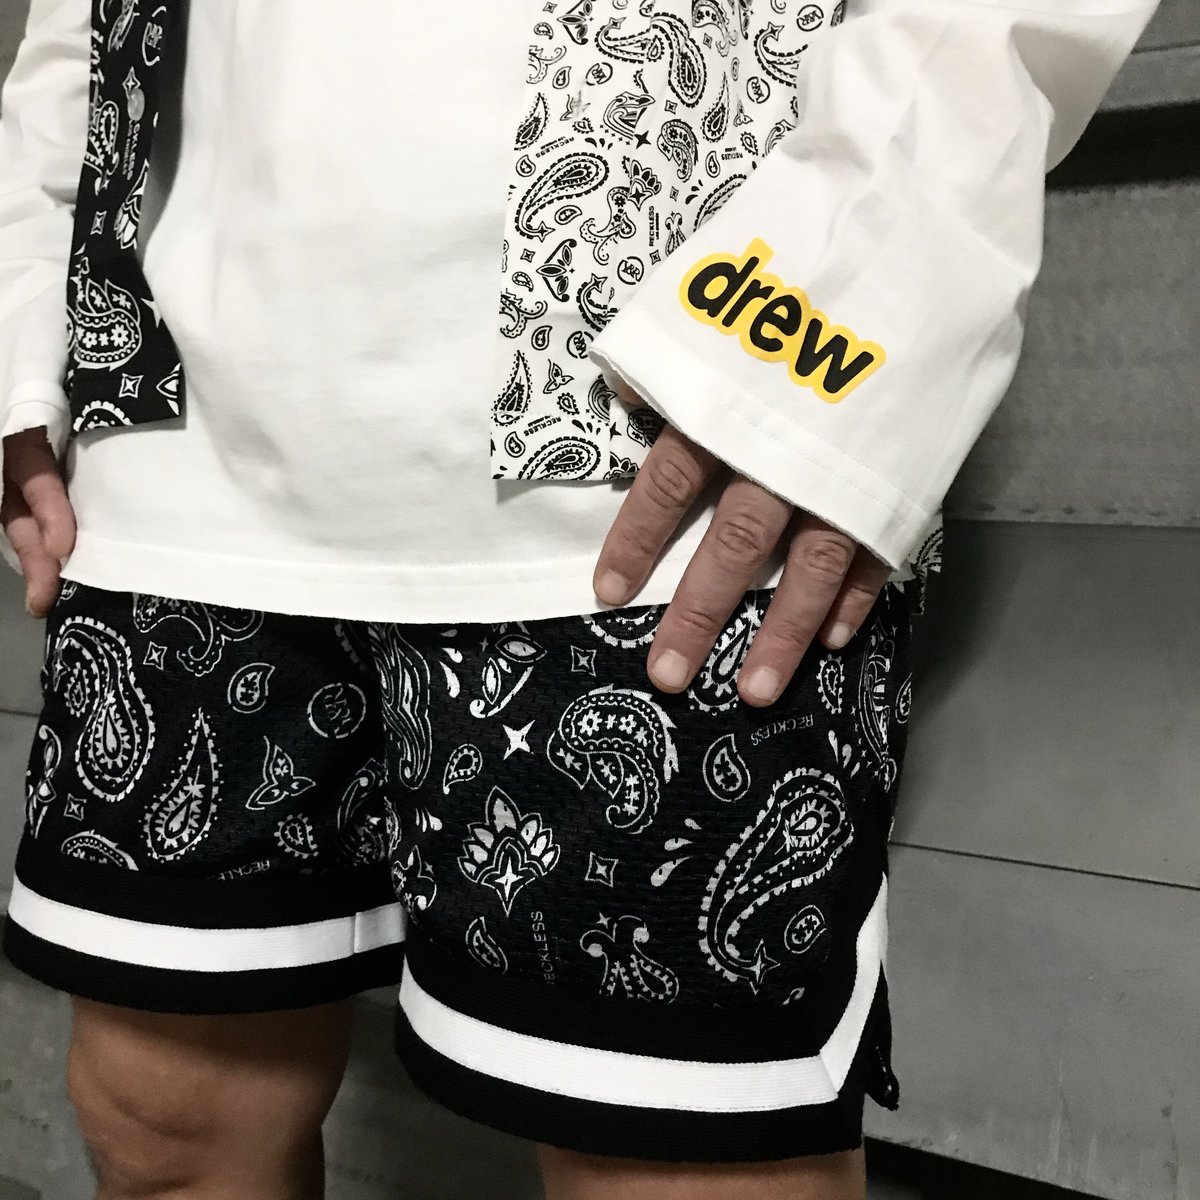 Drew House Shorts